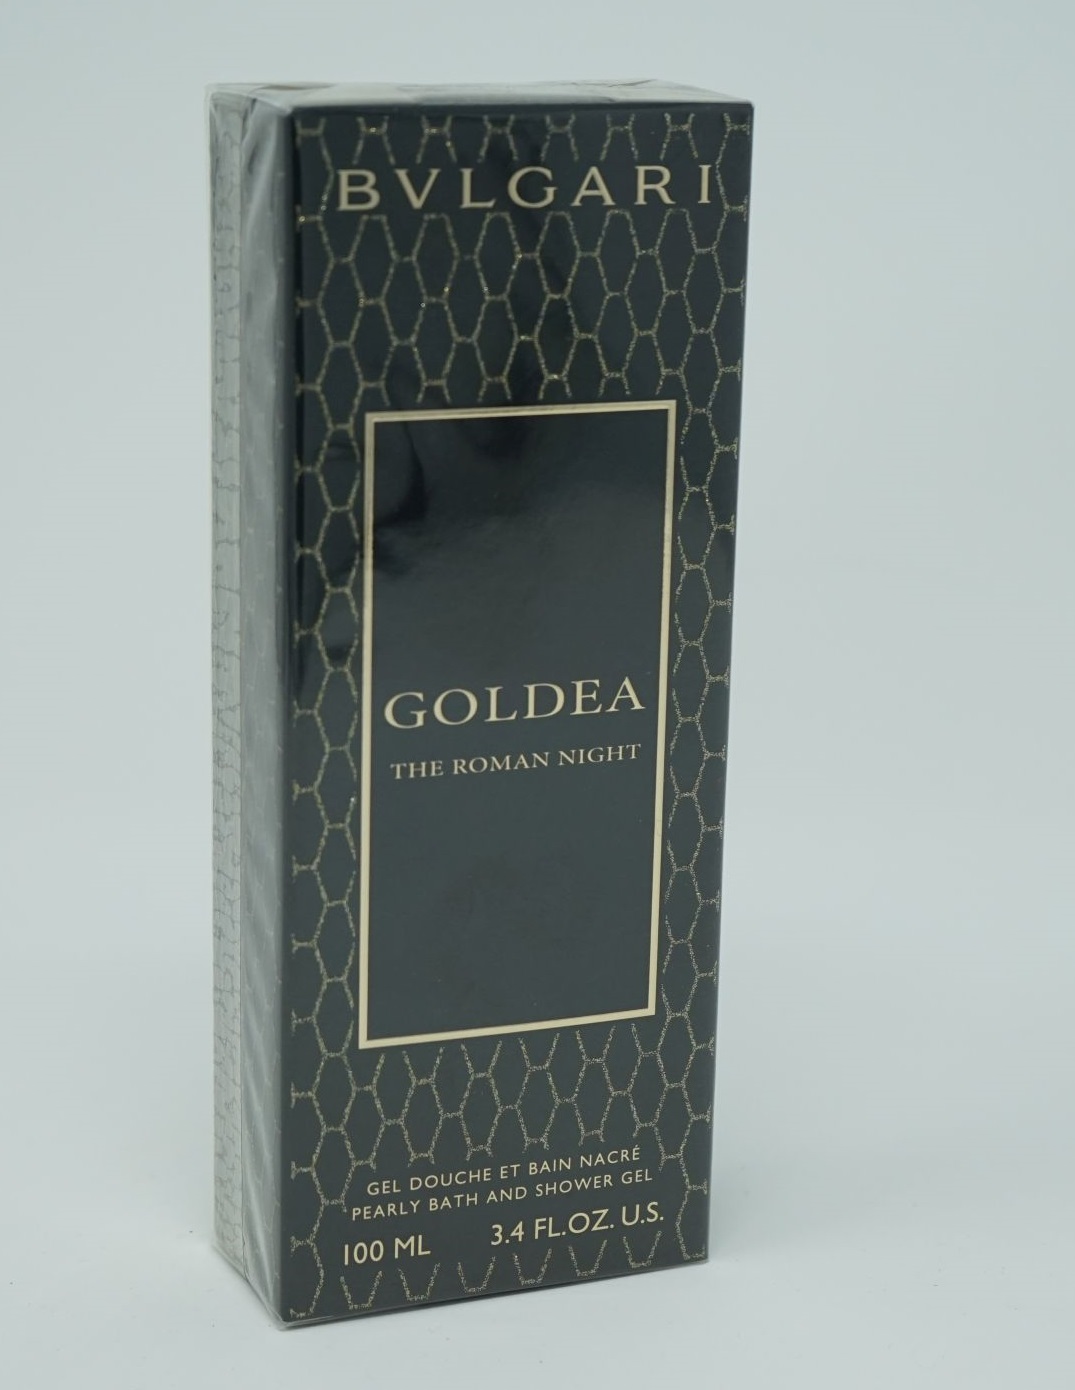 BVLGARI Goldea The Roman Night Perly Bath and Shower Gel 100ml